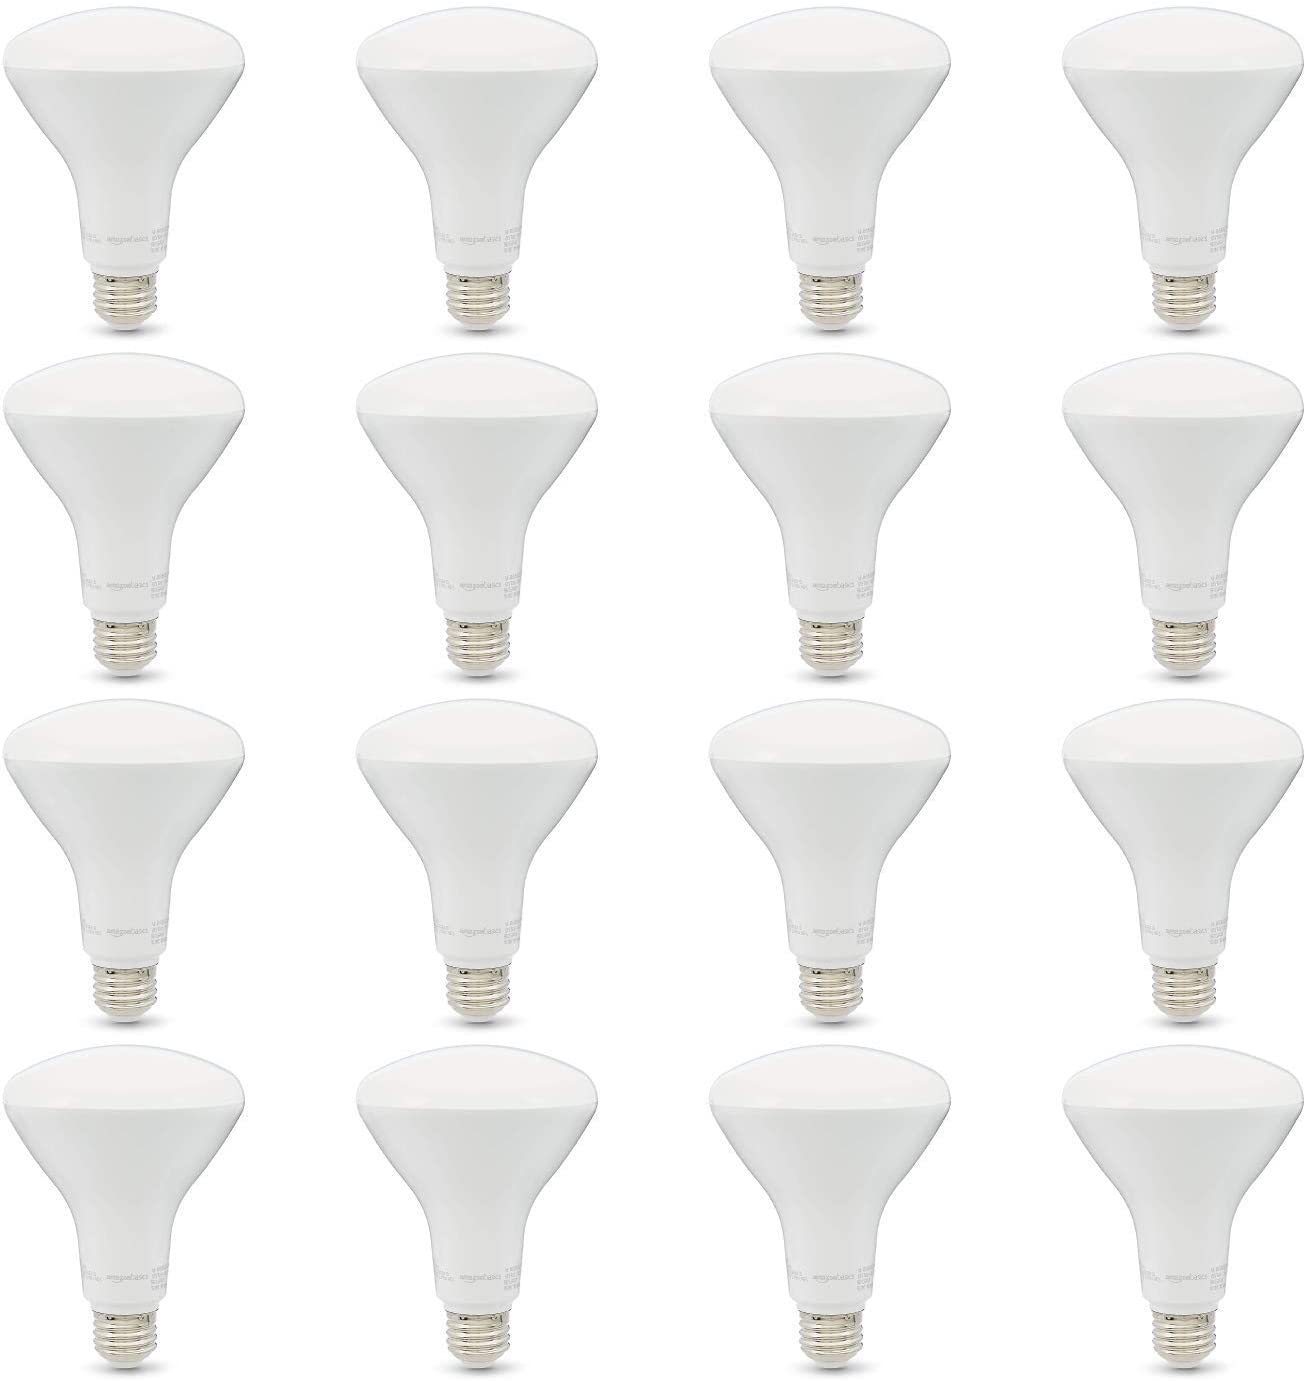 Basics 65W Equivalent, Soft White, Dimmable, 10,000 Hour Lifetime, BR30 LED Light Bulb | 6-Pack